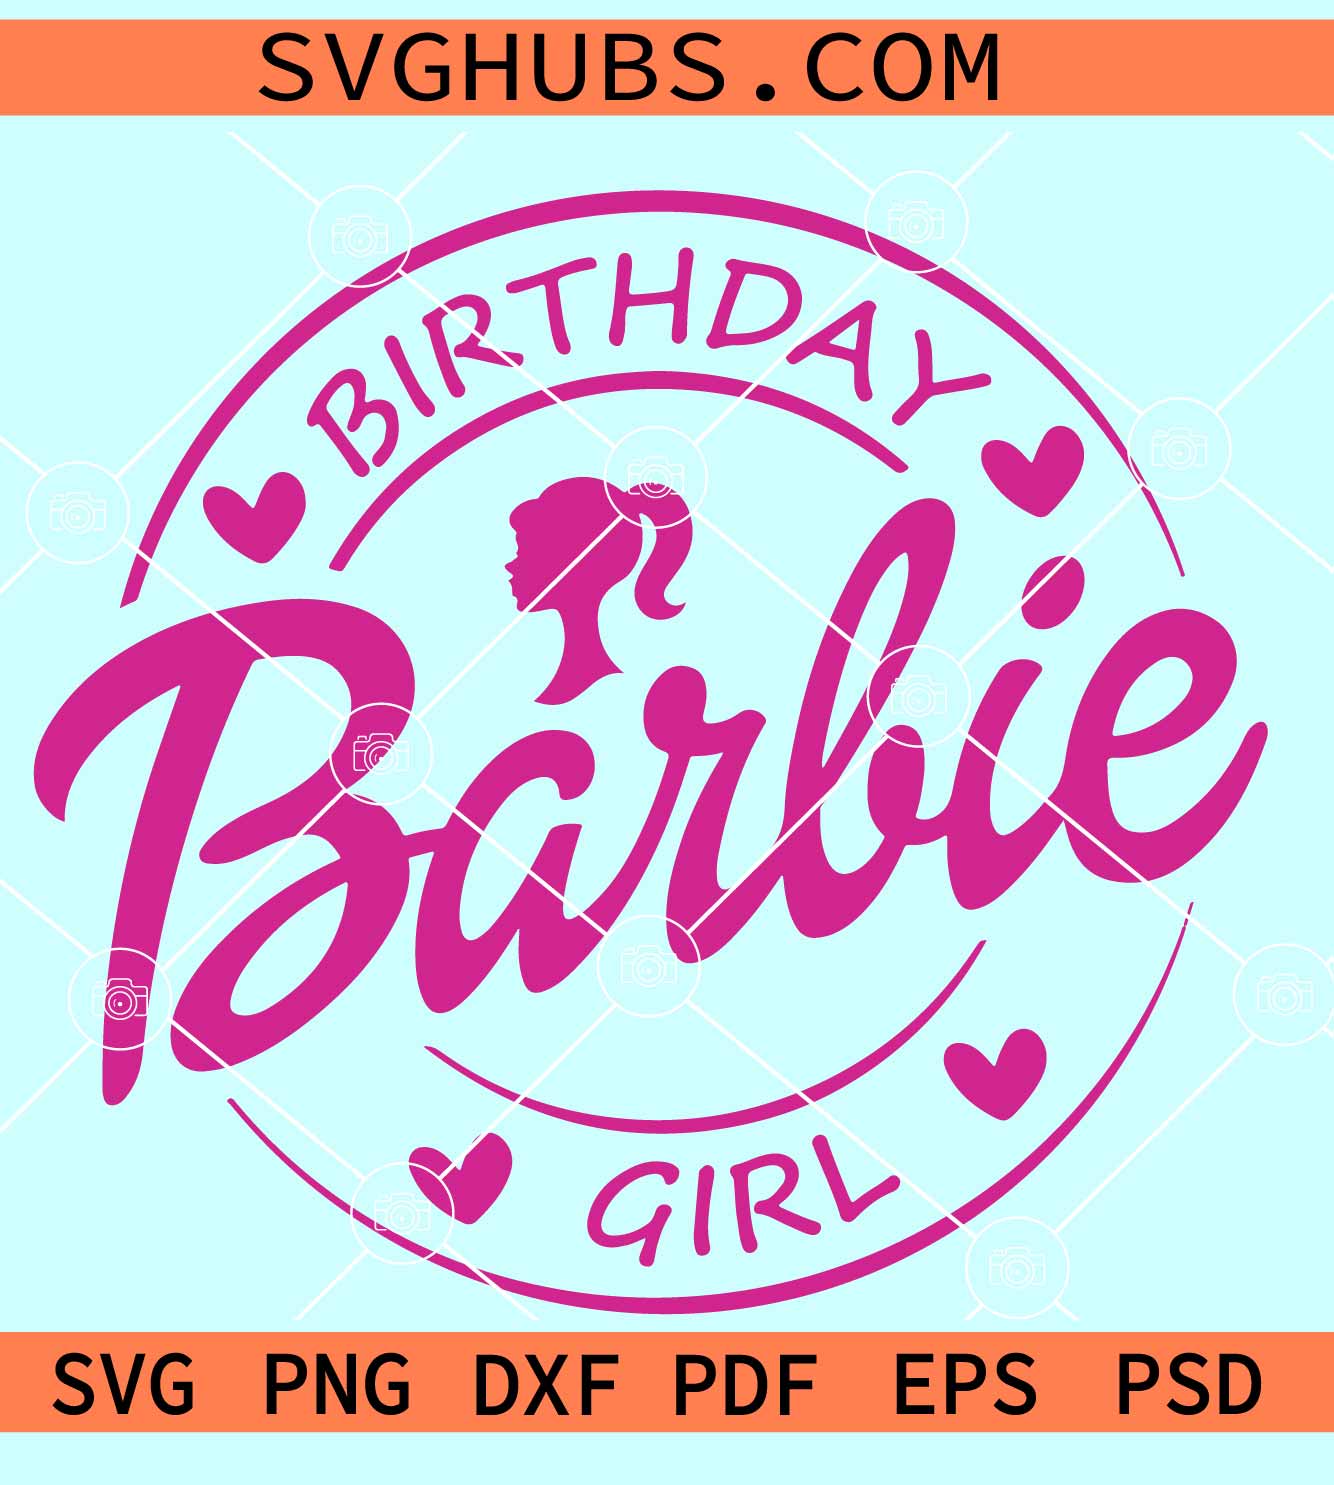 Barbie birthday girl SVG, birthday Barbie svg, Barbie Doll SVG